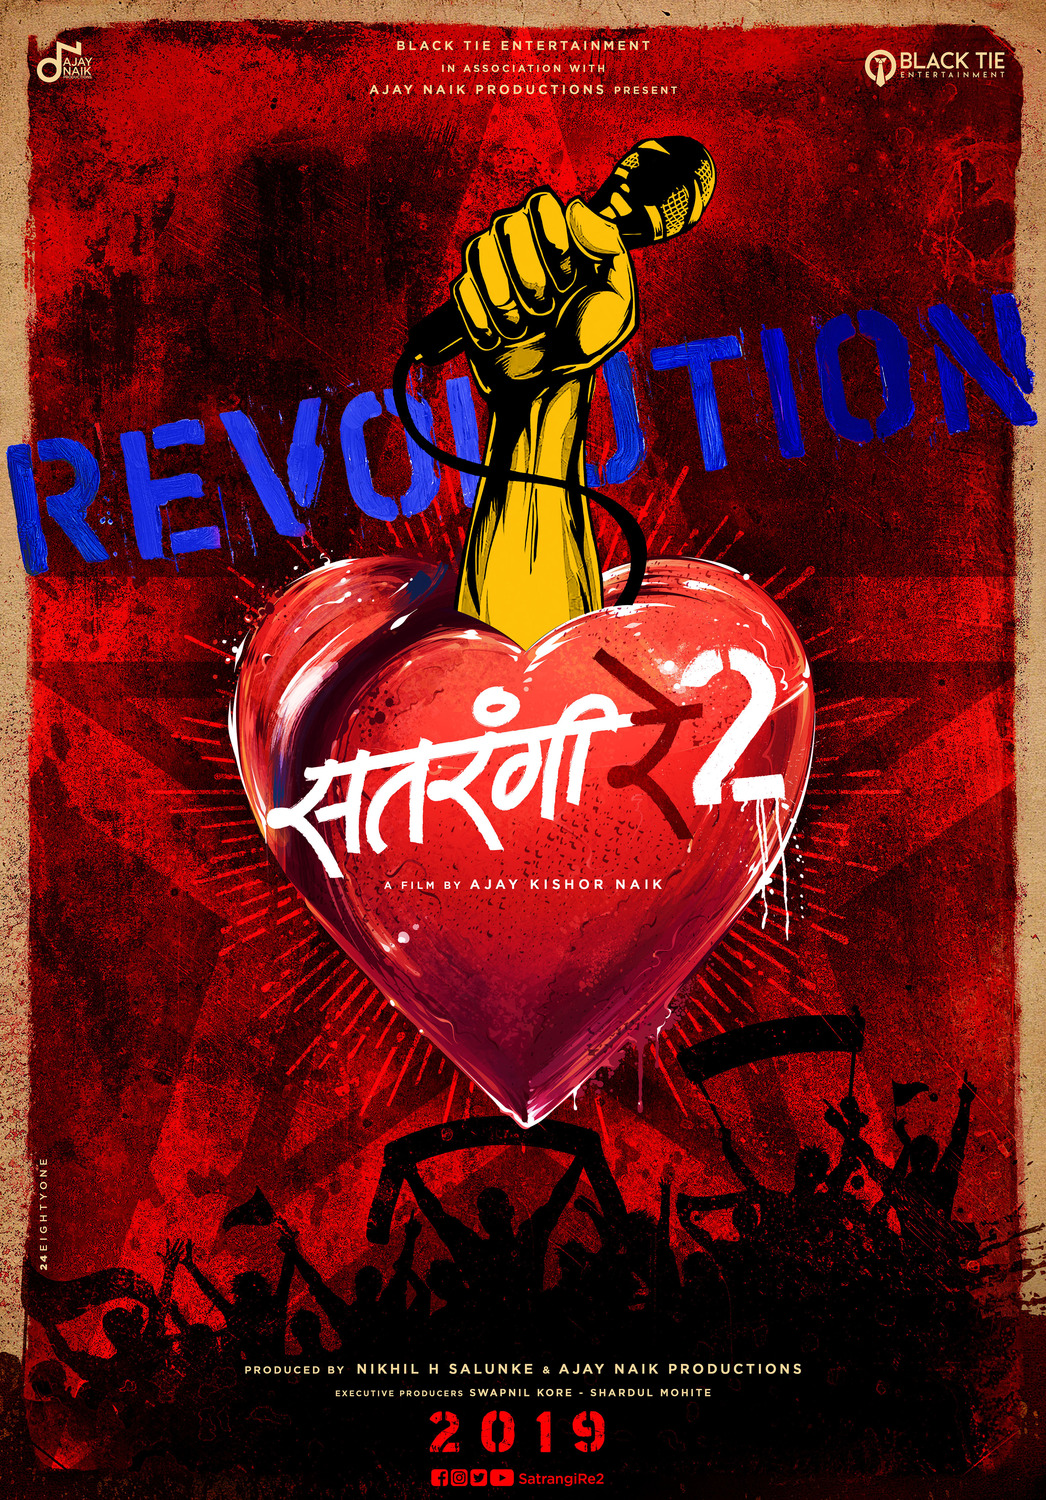 Extra Large Movie Poster Image for Satrangi Re 2 